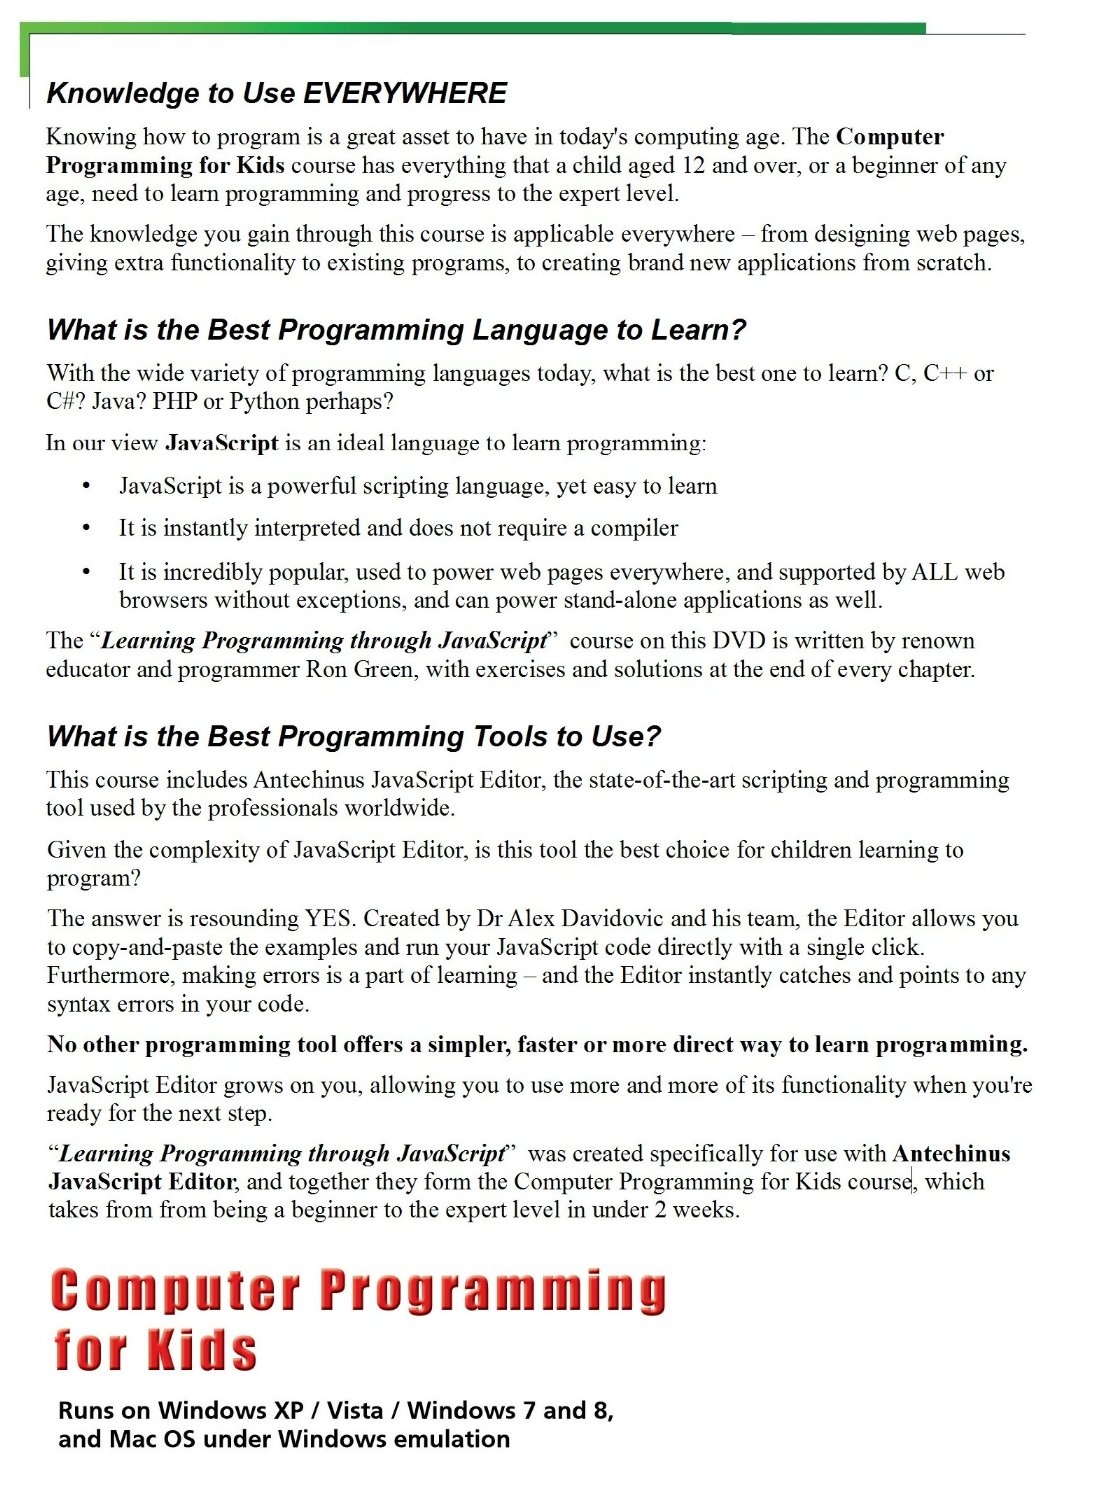 Learning Programming through JavaScript